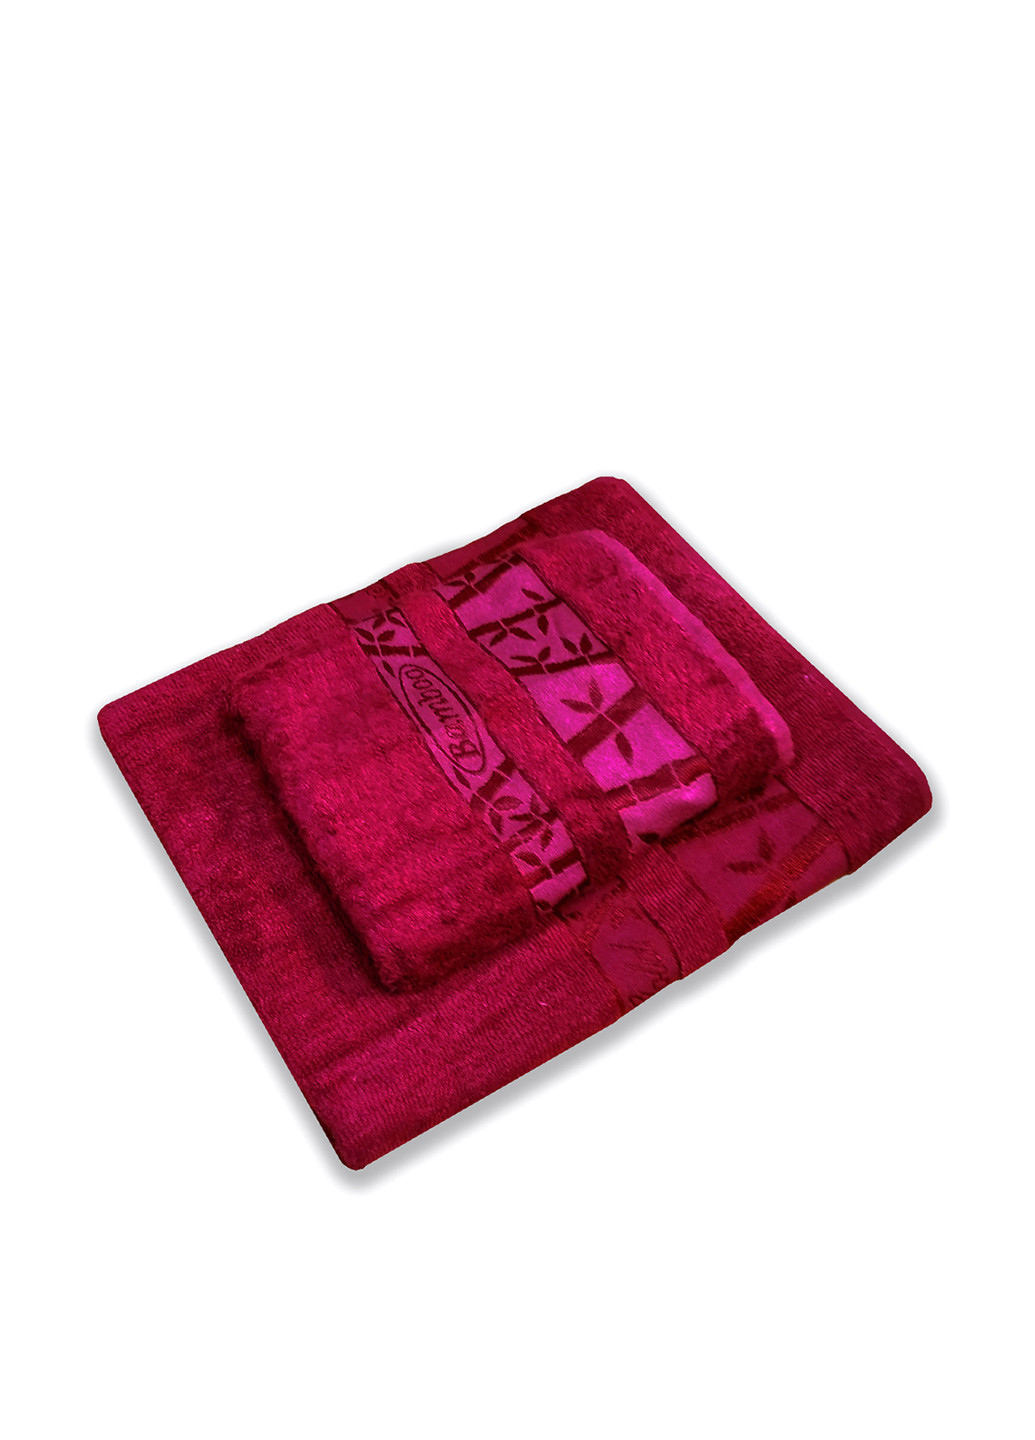 No Brand полотенце, 70х140 см рисунок бордовый производство - Турция